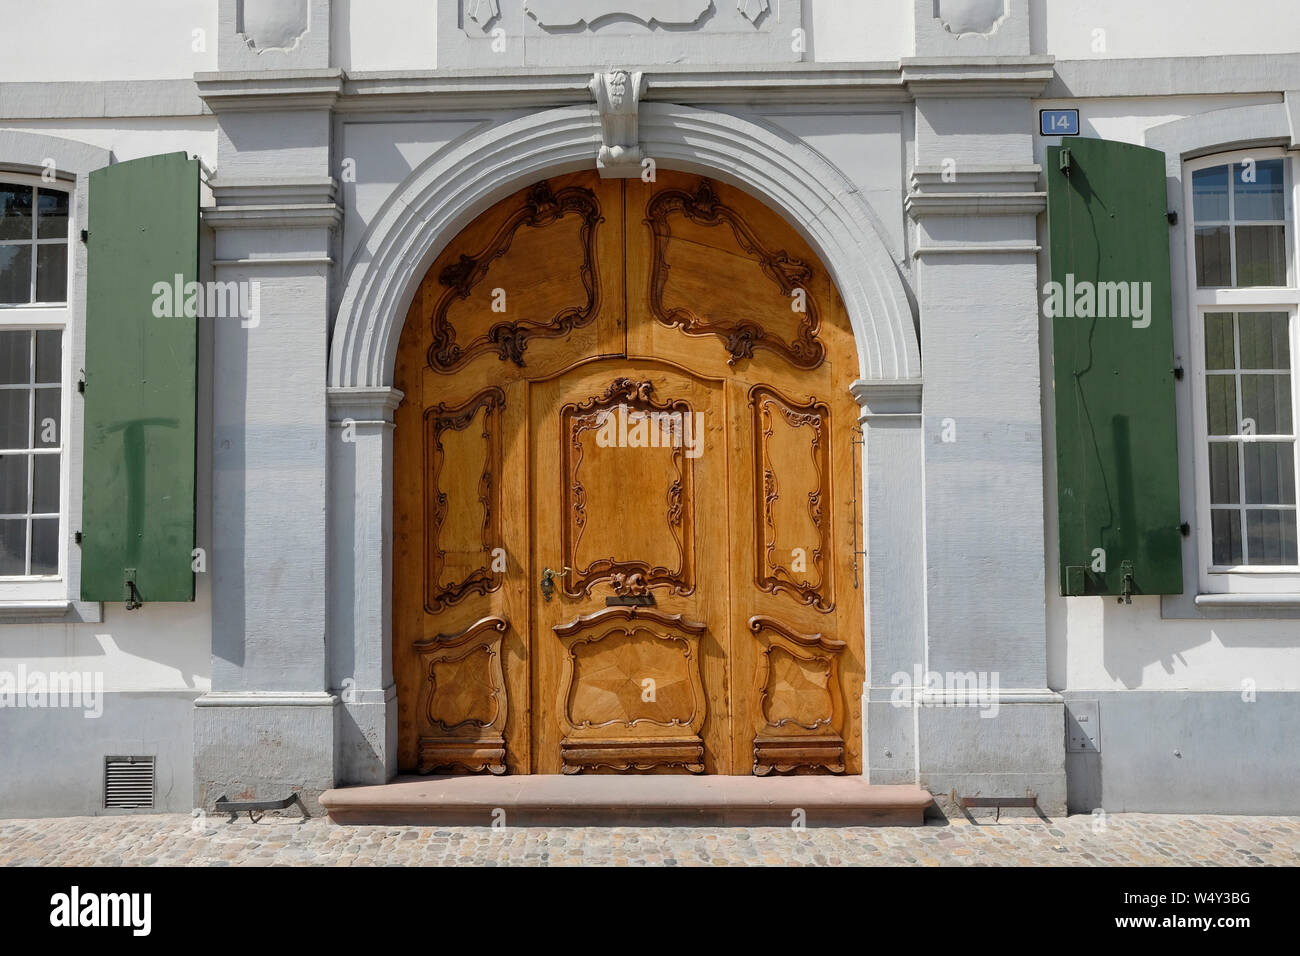 Eine alte Tür, Münsterplatz, Basel, Schweiz Stockfotografie - Alamy